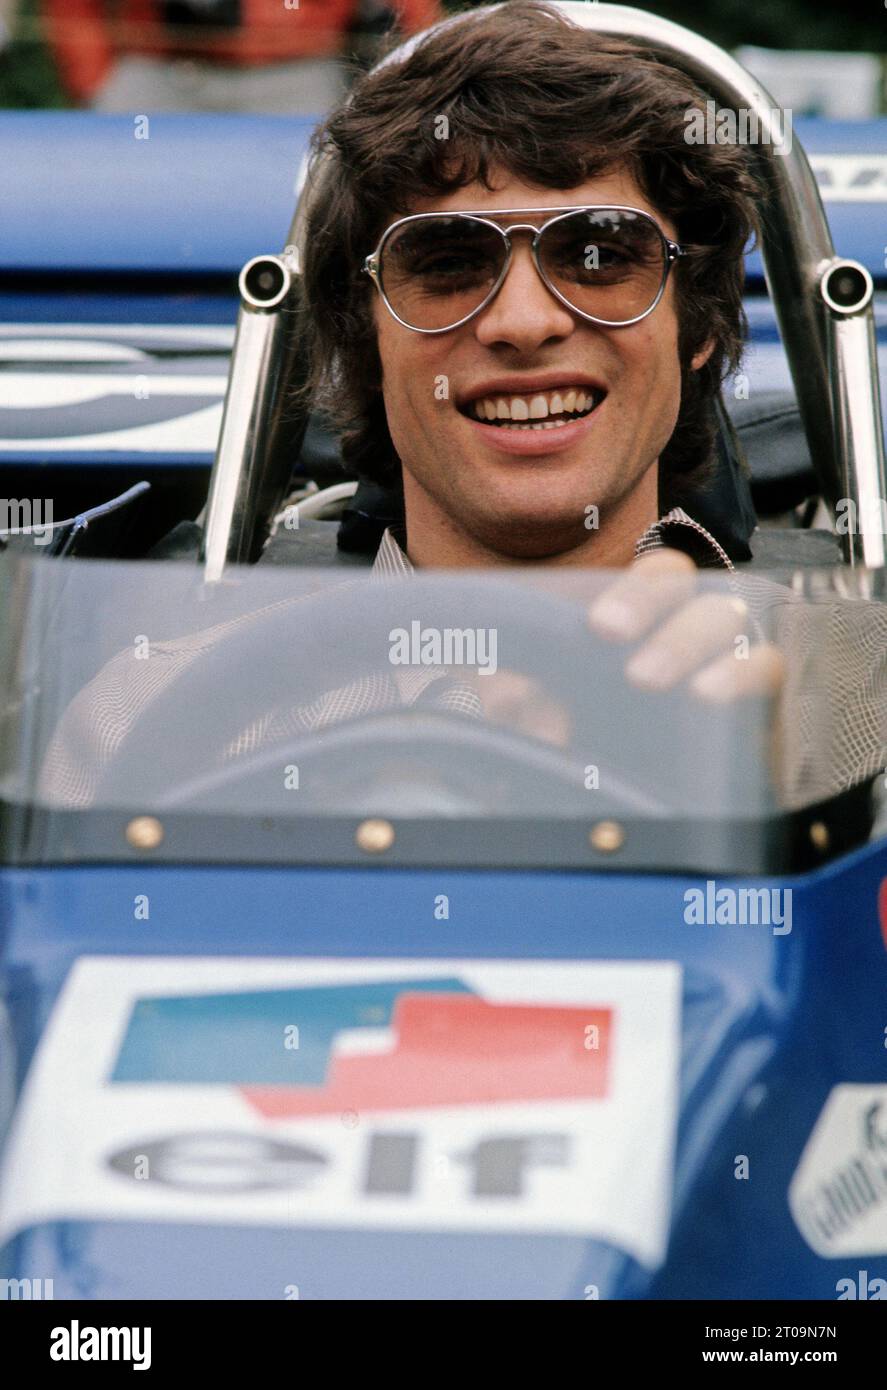 MOTORSPORT - F1 1971 - PHOTO DPPI - FRANÇOIS CEVERT (FRA) - TYRRELL FORD COSWORTH - AMBIANCE PORTRAIT Stock Photo